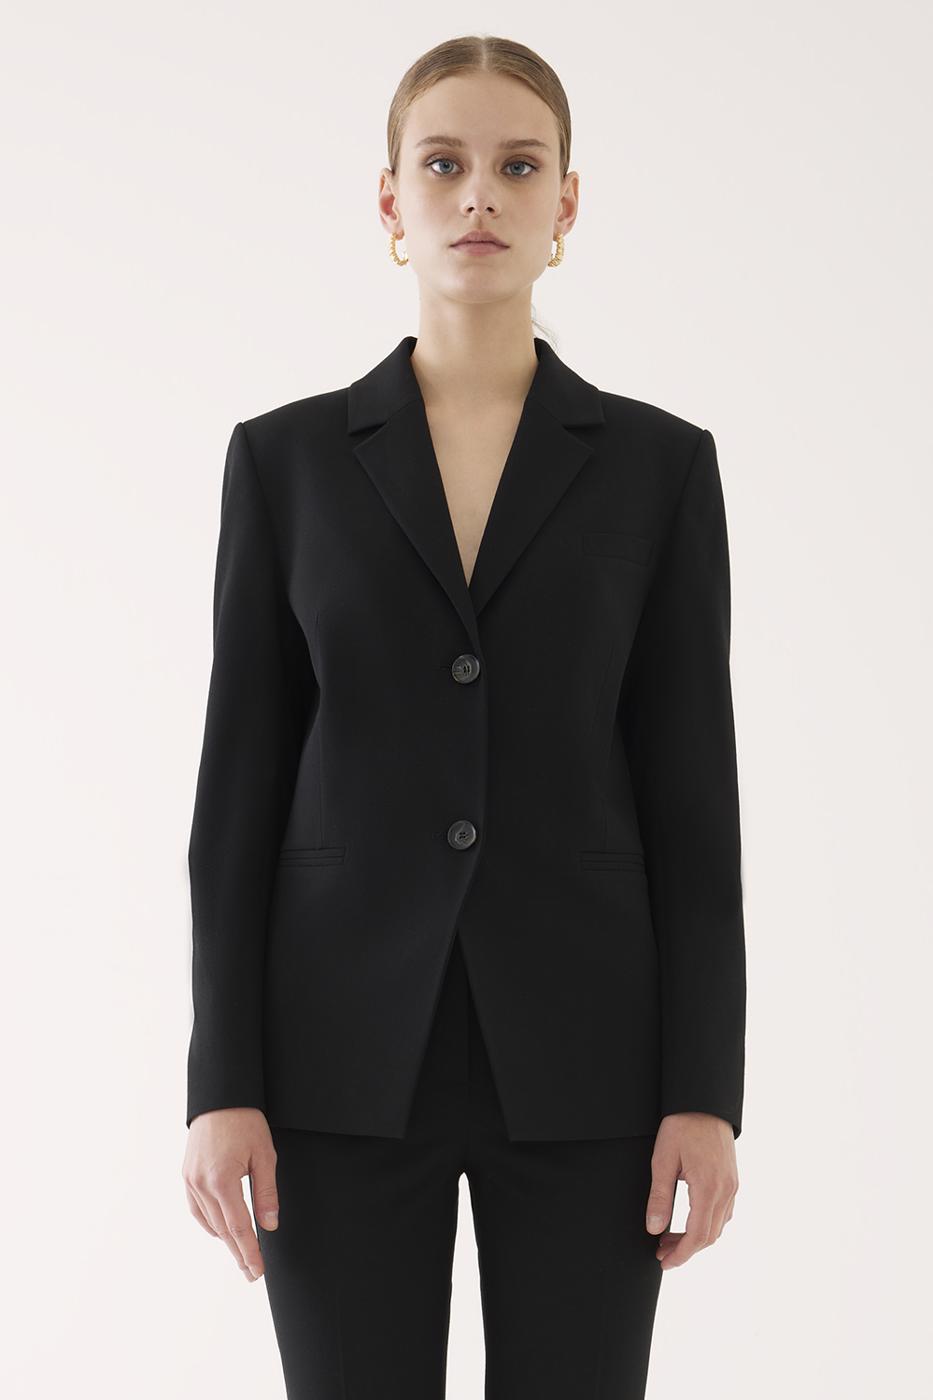 Bayan SİYAH İcardi Regular Fit Standart Boy Takma Kol Ceket Yaka Siyah Renk Kadın Ceket